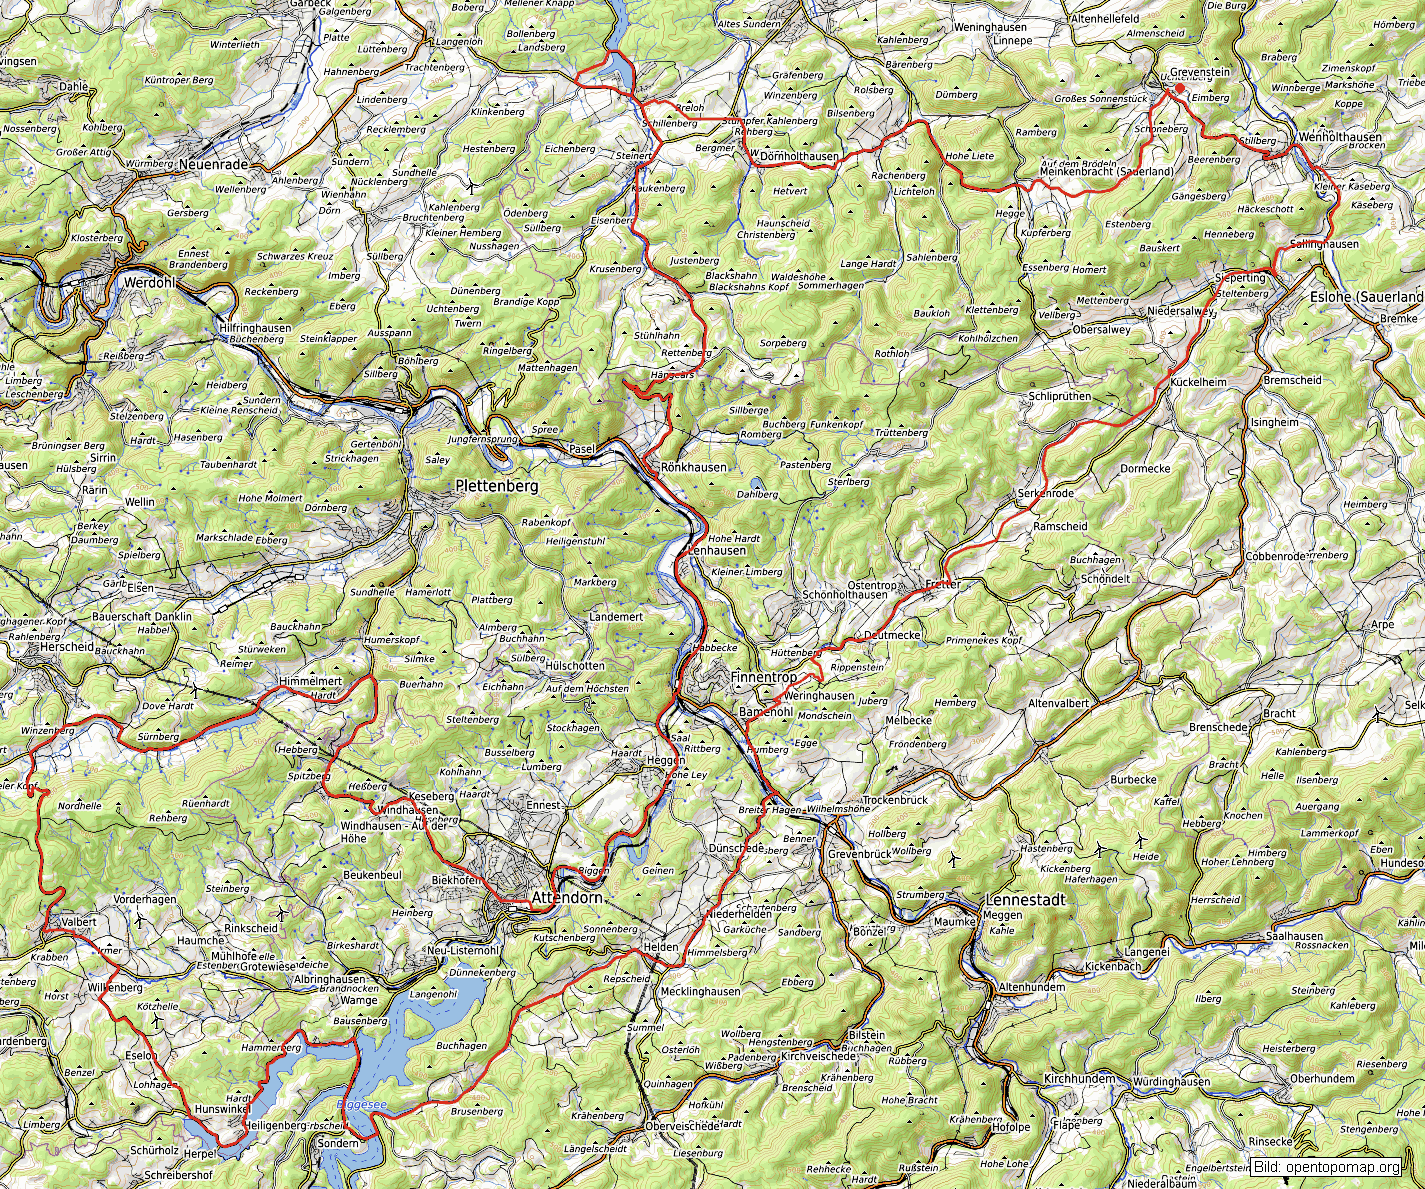  Rennrad-Tour 3 Vier-Seen-Runde Homert-Ebbegebirge 